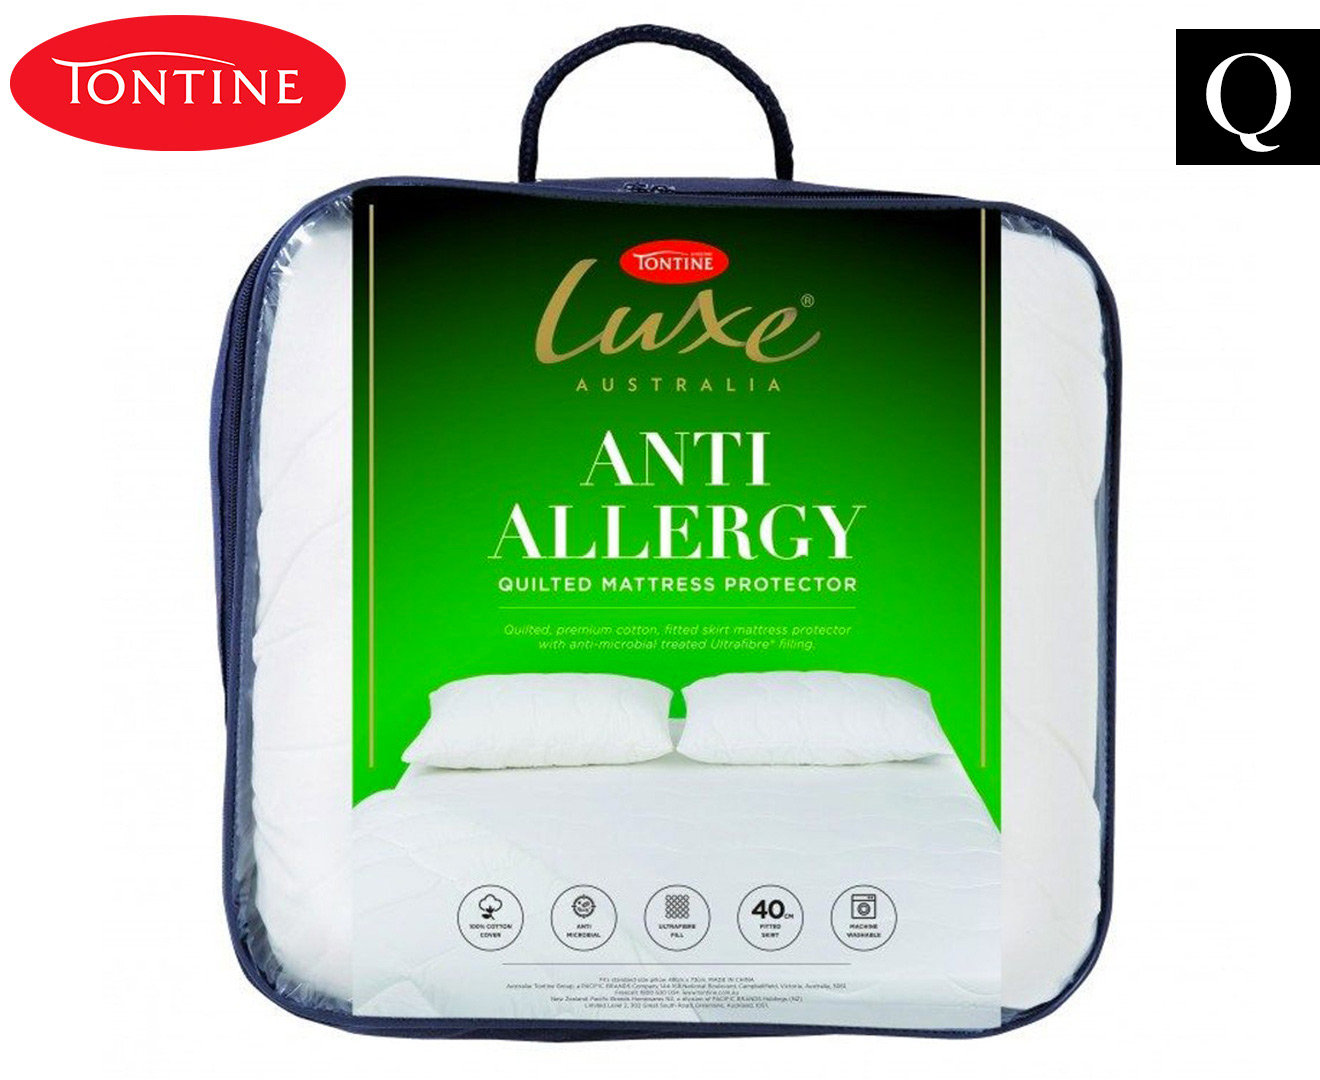 anti-allergy mattress cover